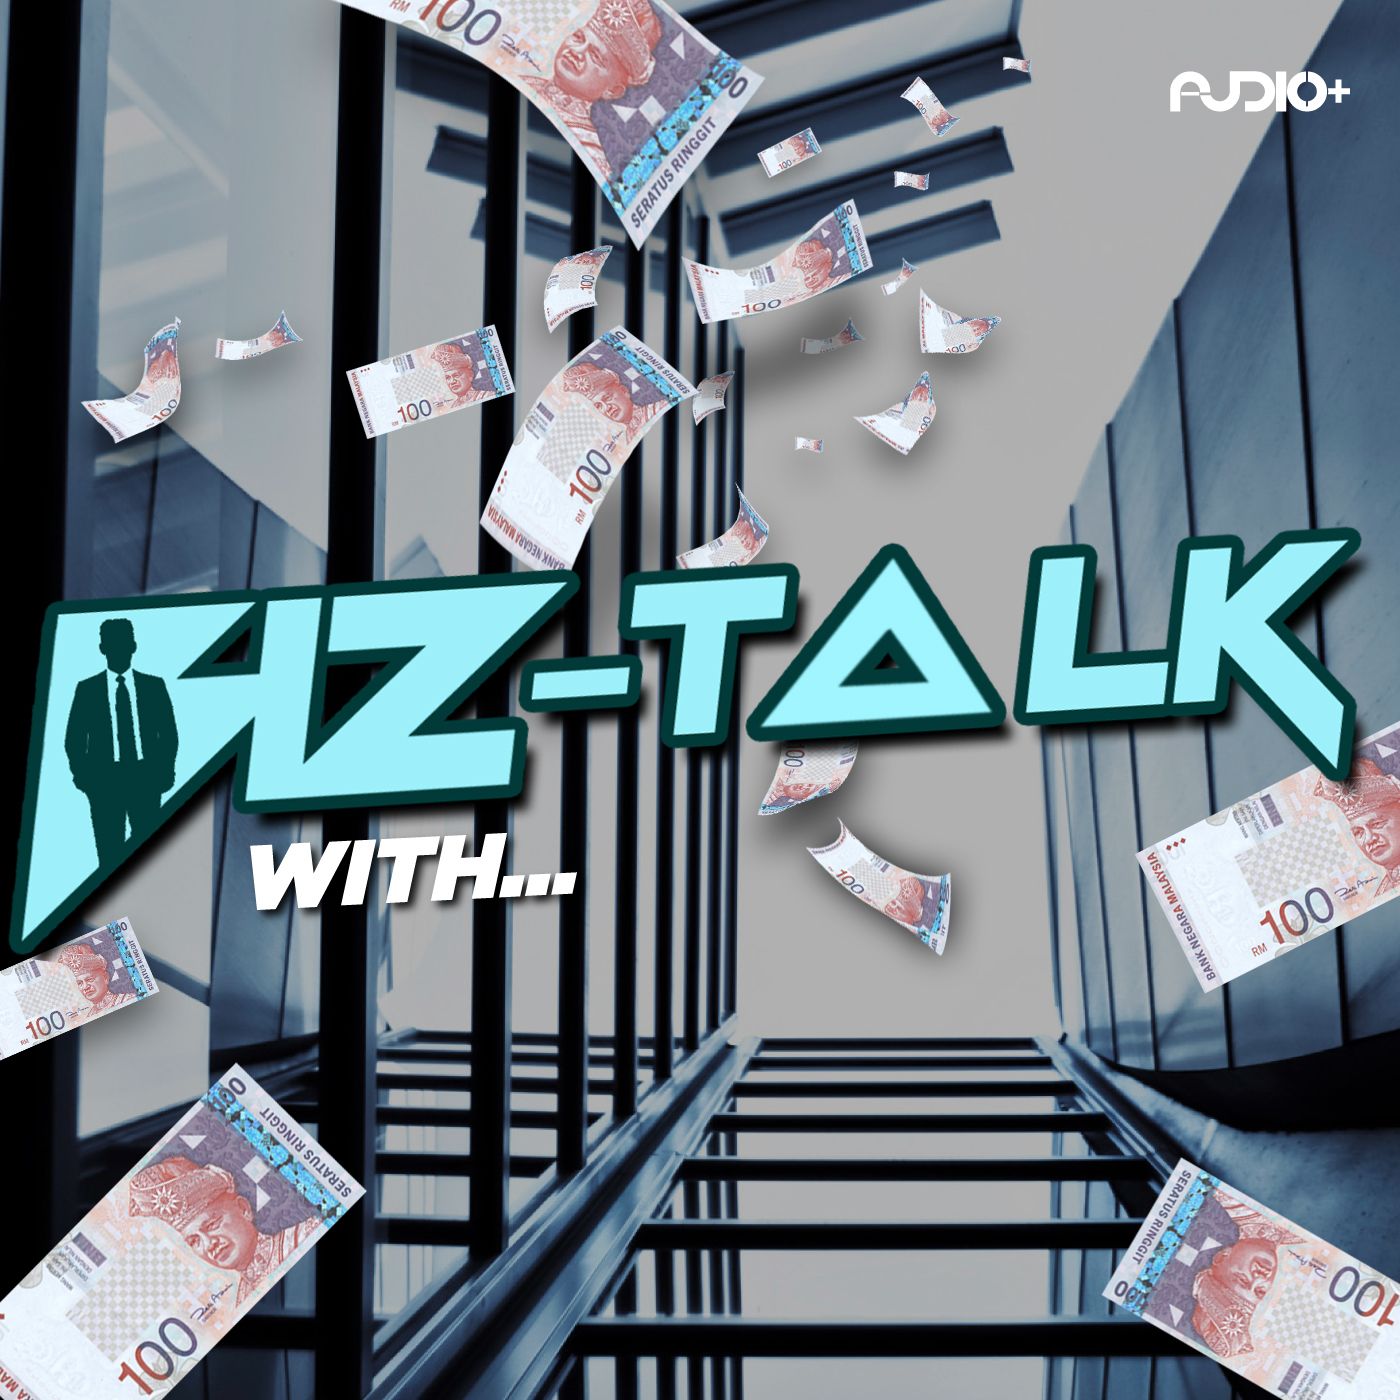 Episode 04 - Rifdi Bersama Luqman : Biz Talk With...